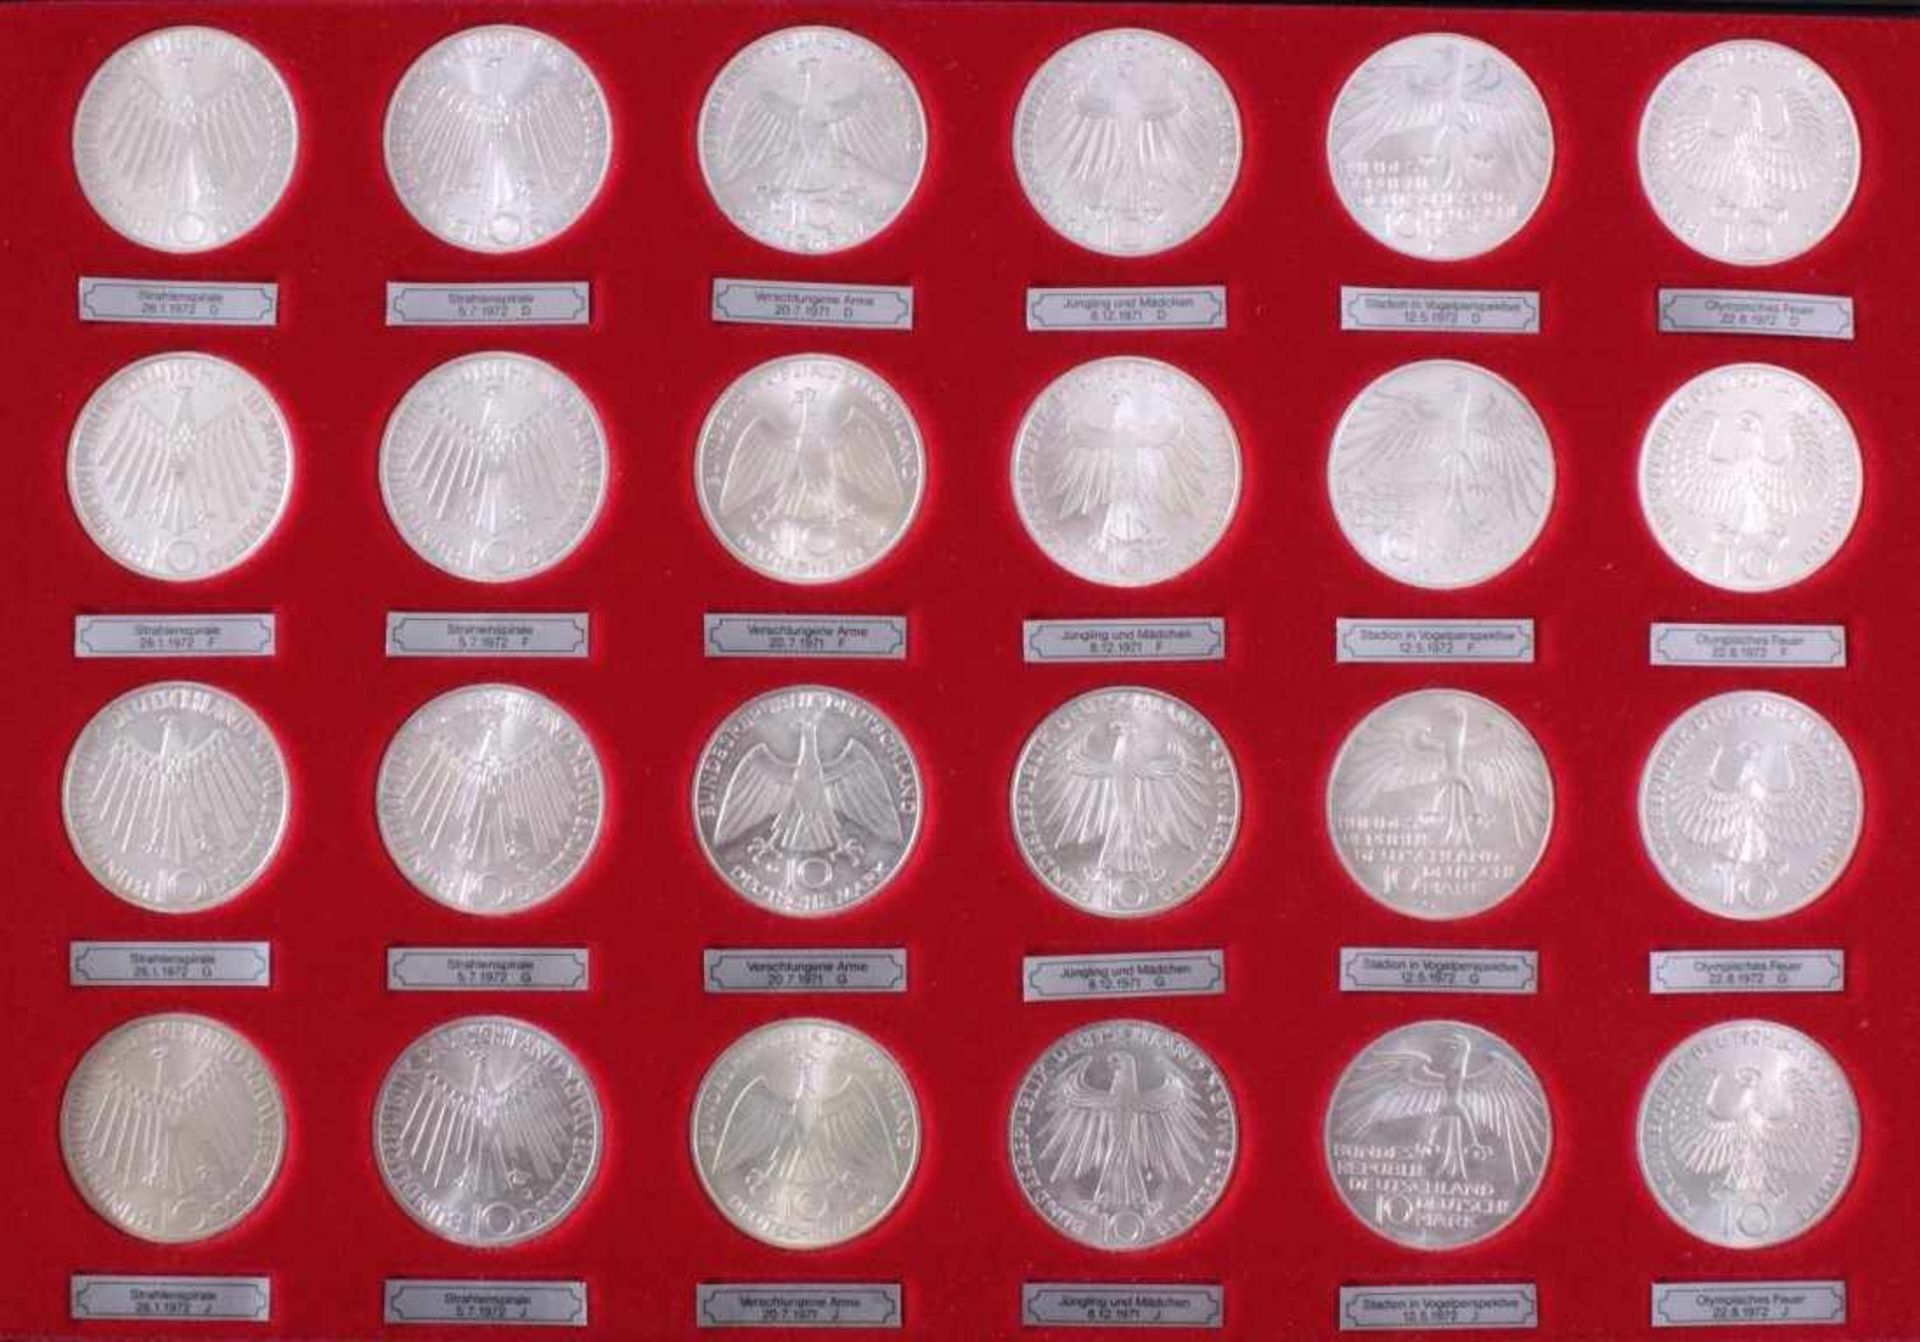 72 10-DM Münzenin 3 Ka-Be Münzschubern, inklusive Olympia komplett, 750Jahre Berlin etc. Zustand - Bild 6 aus 7